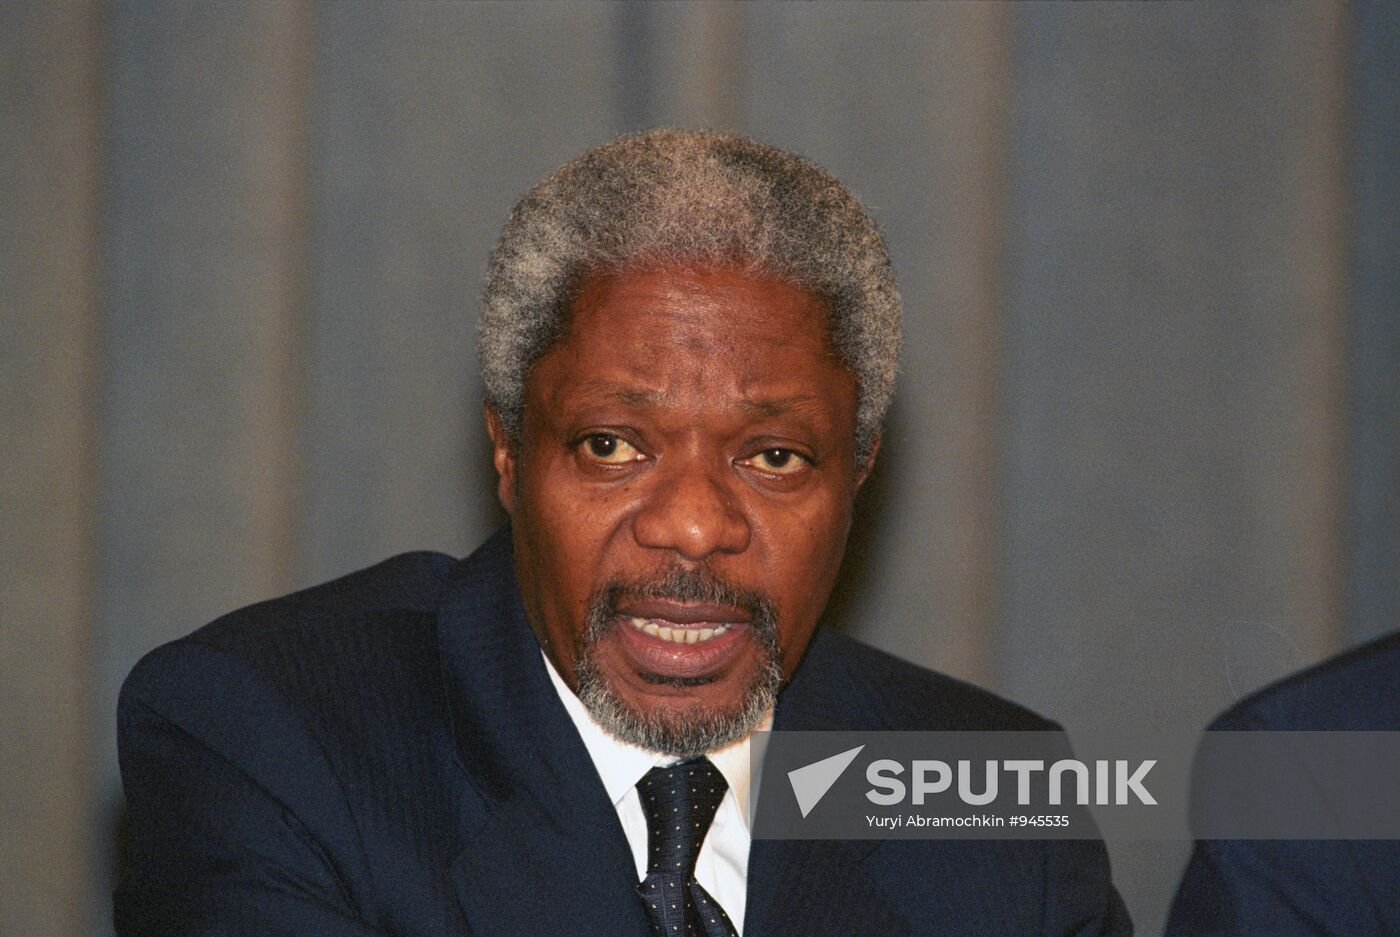 Kofi Annan